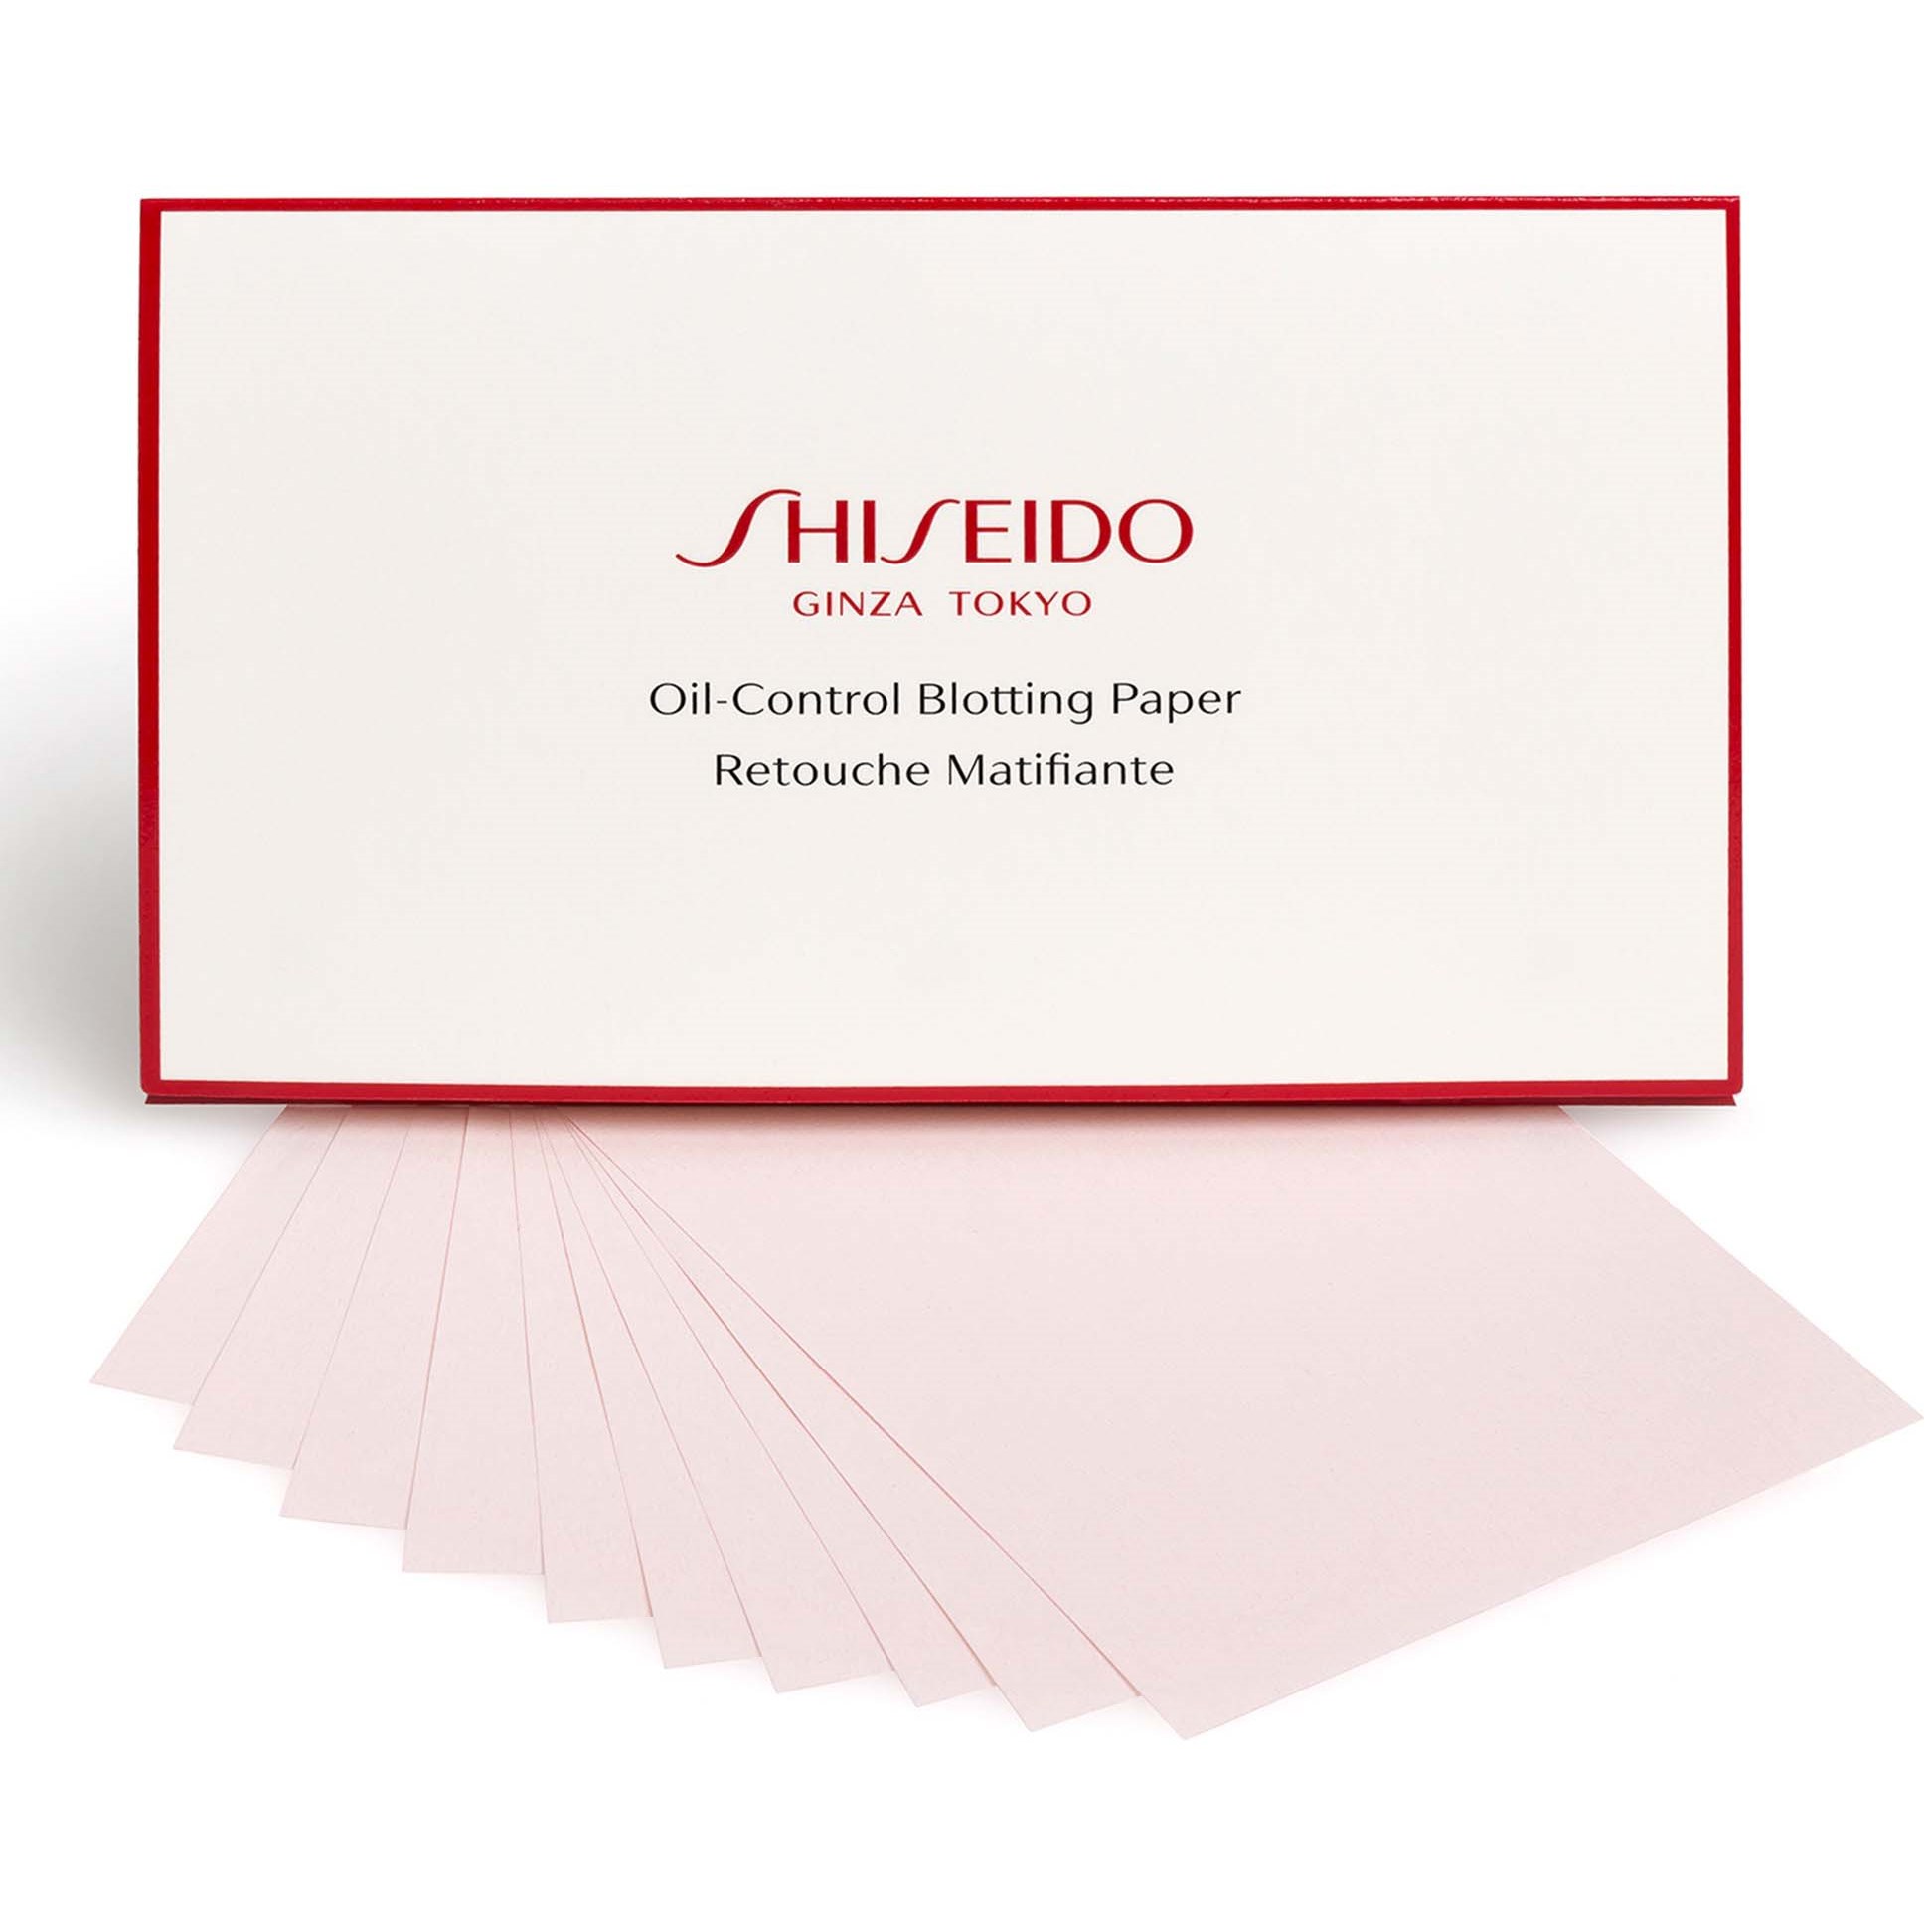 Shiseido Oil Control Blotting Paper 100 Sheets